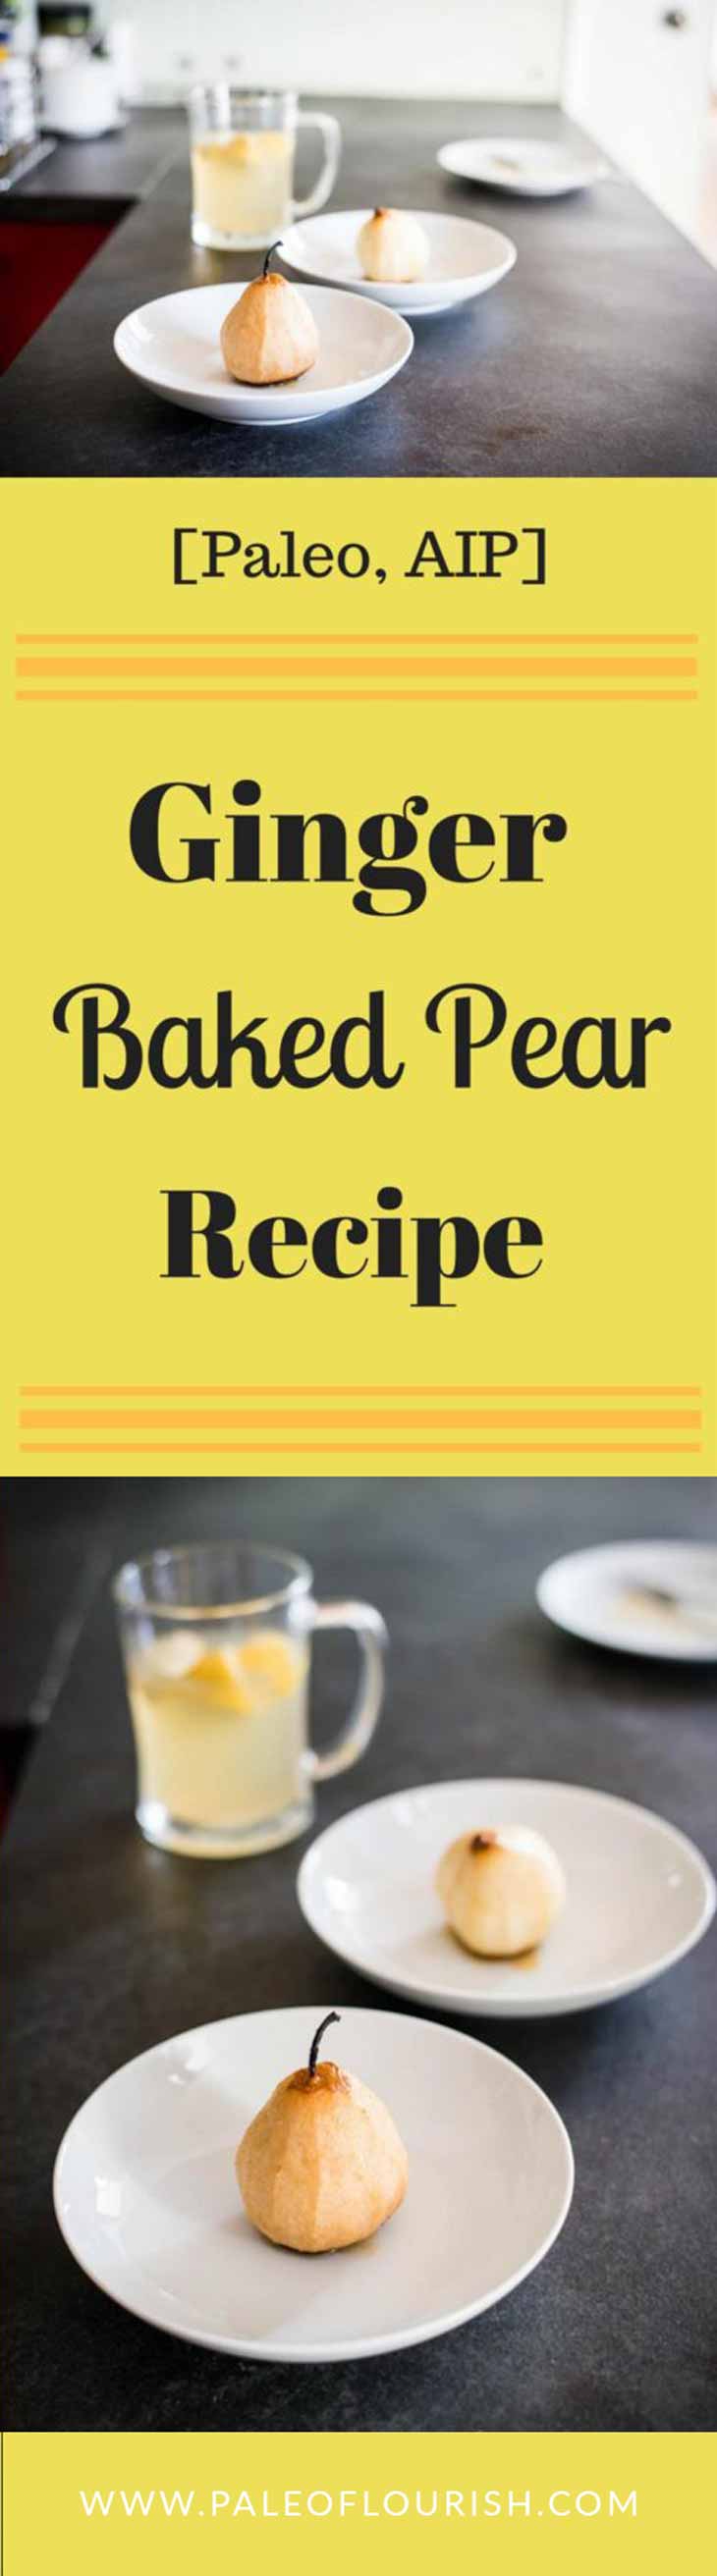 Ginger Baked Pear Recipe [Paleo, AIP] #paleo #AIP #recipes - https://paleoflourish.com/ginger-baked-pear-recipe-paleo-aip